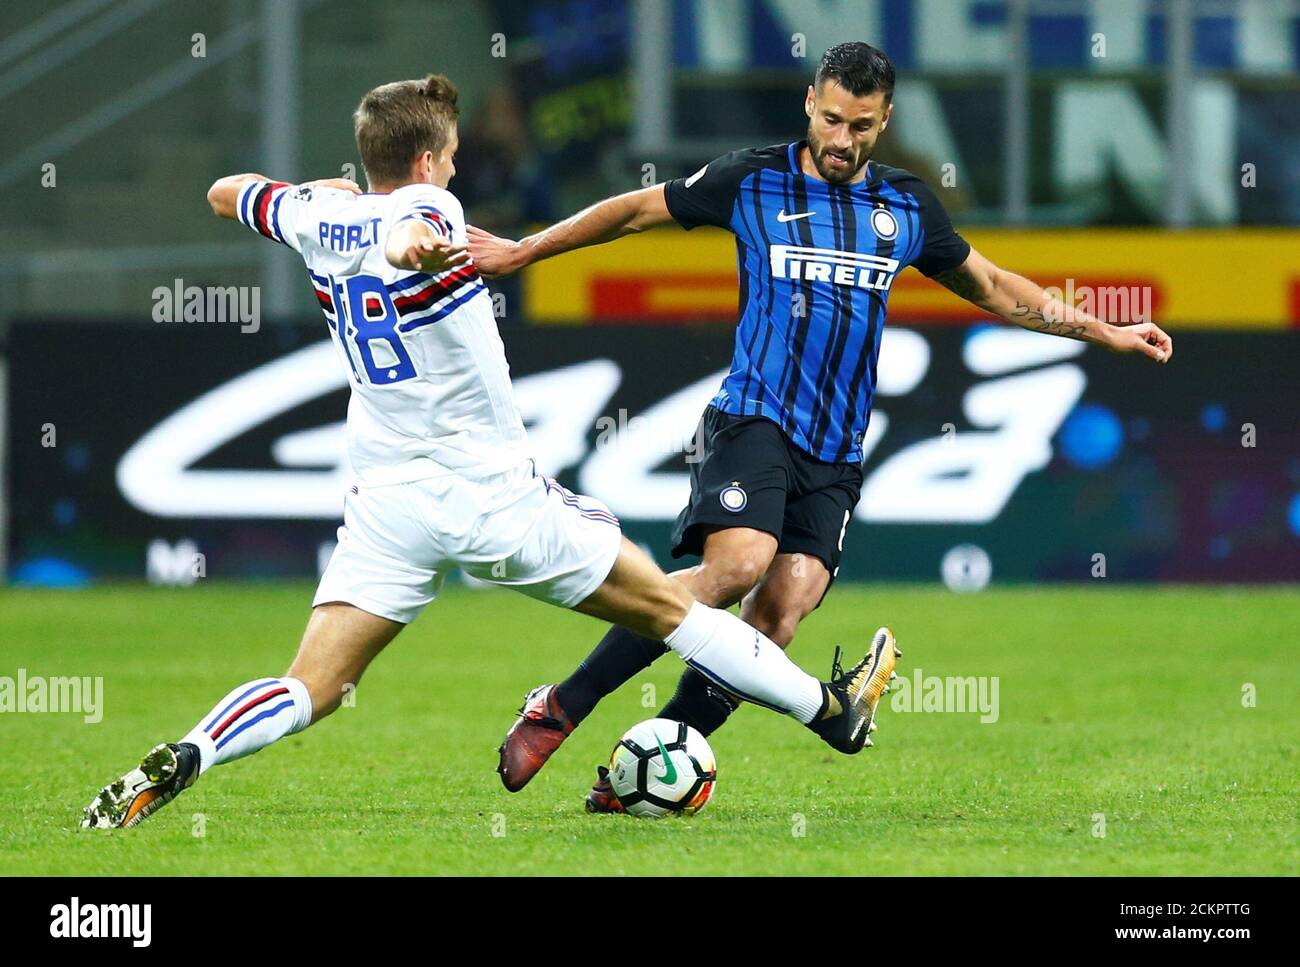 Sampdoria vs inter milan